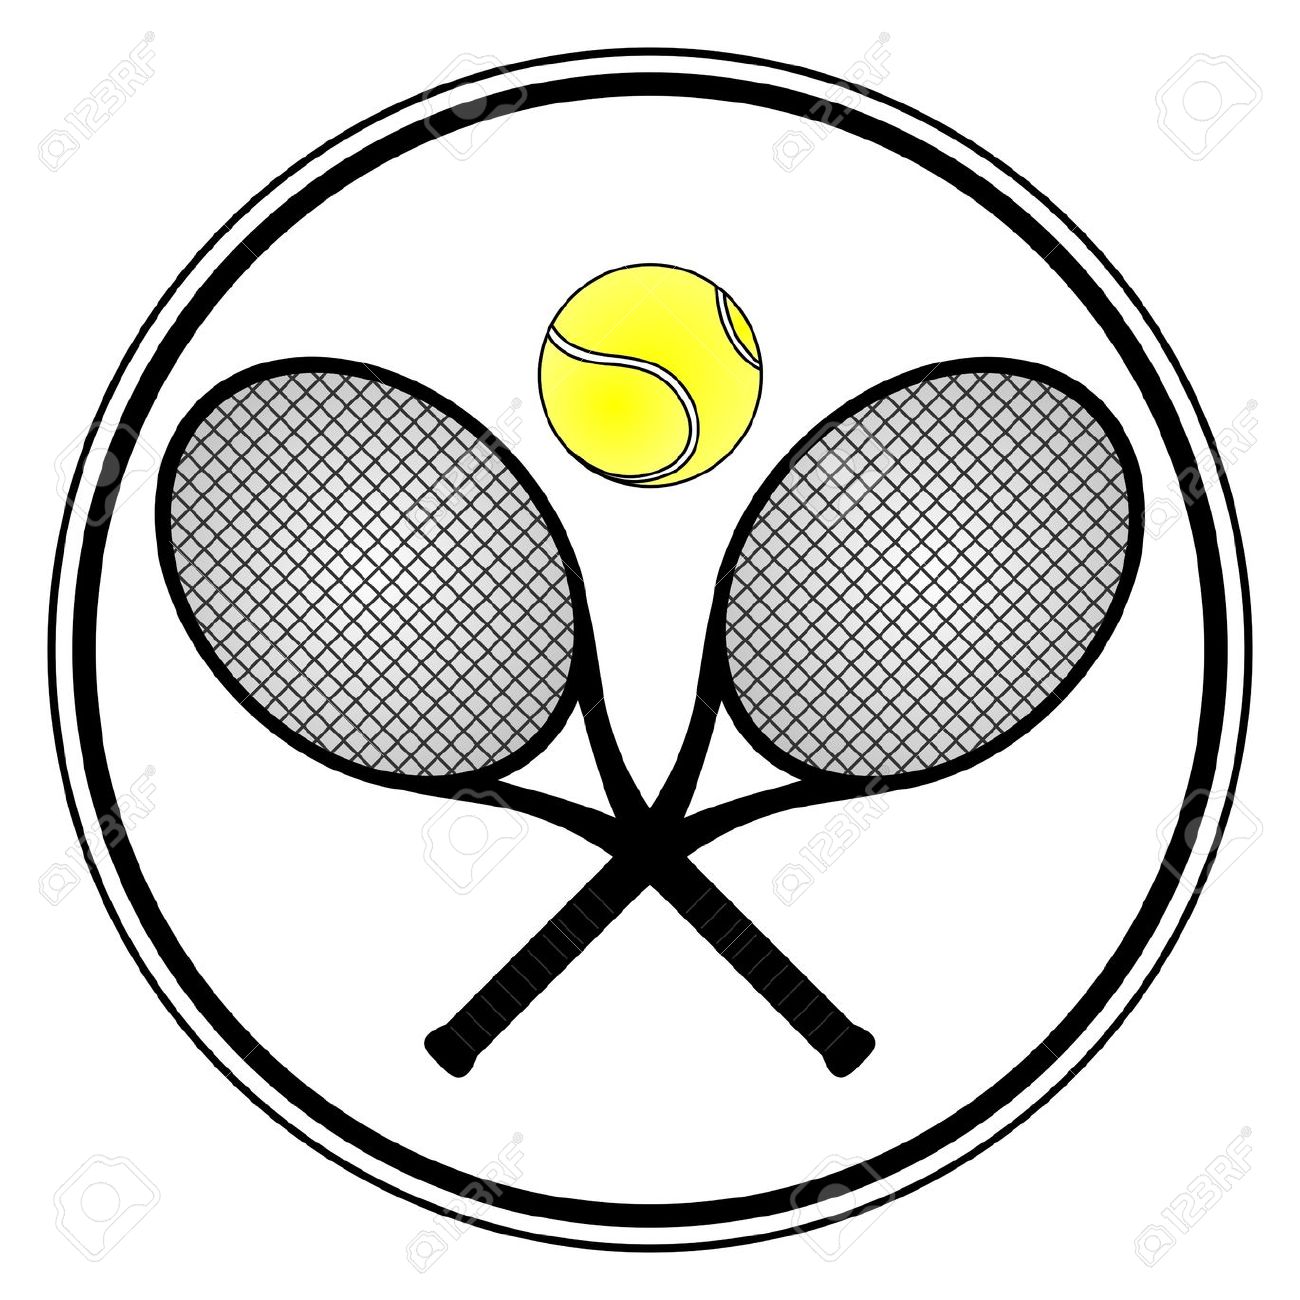 Tennis Racket Drawing at GetDrawings Free download